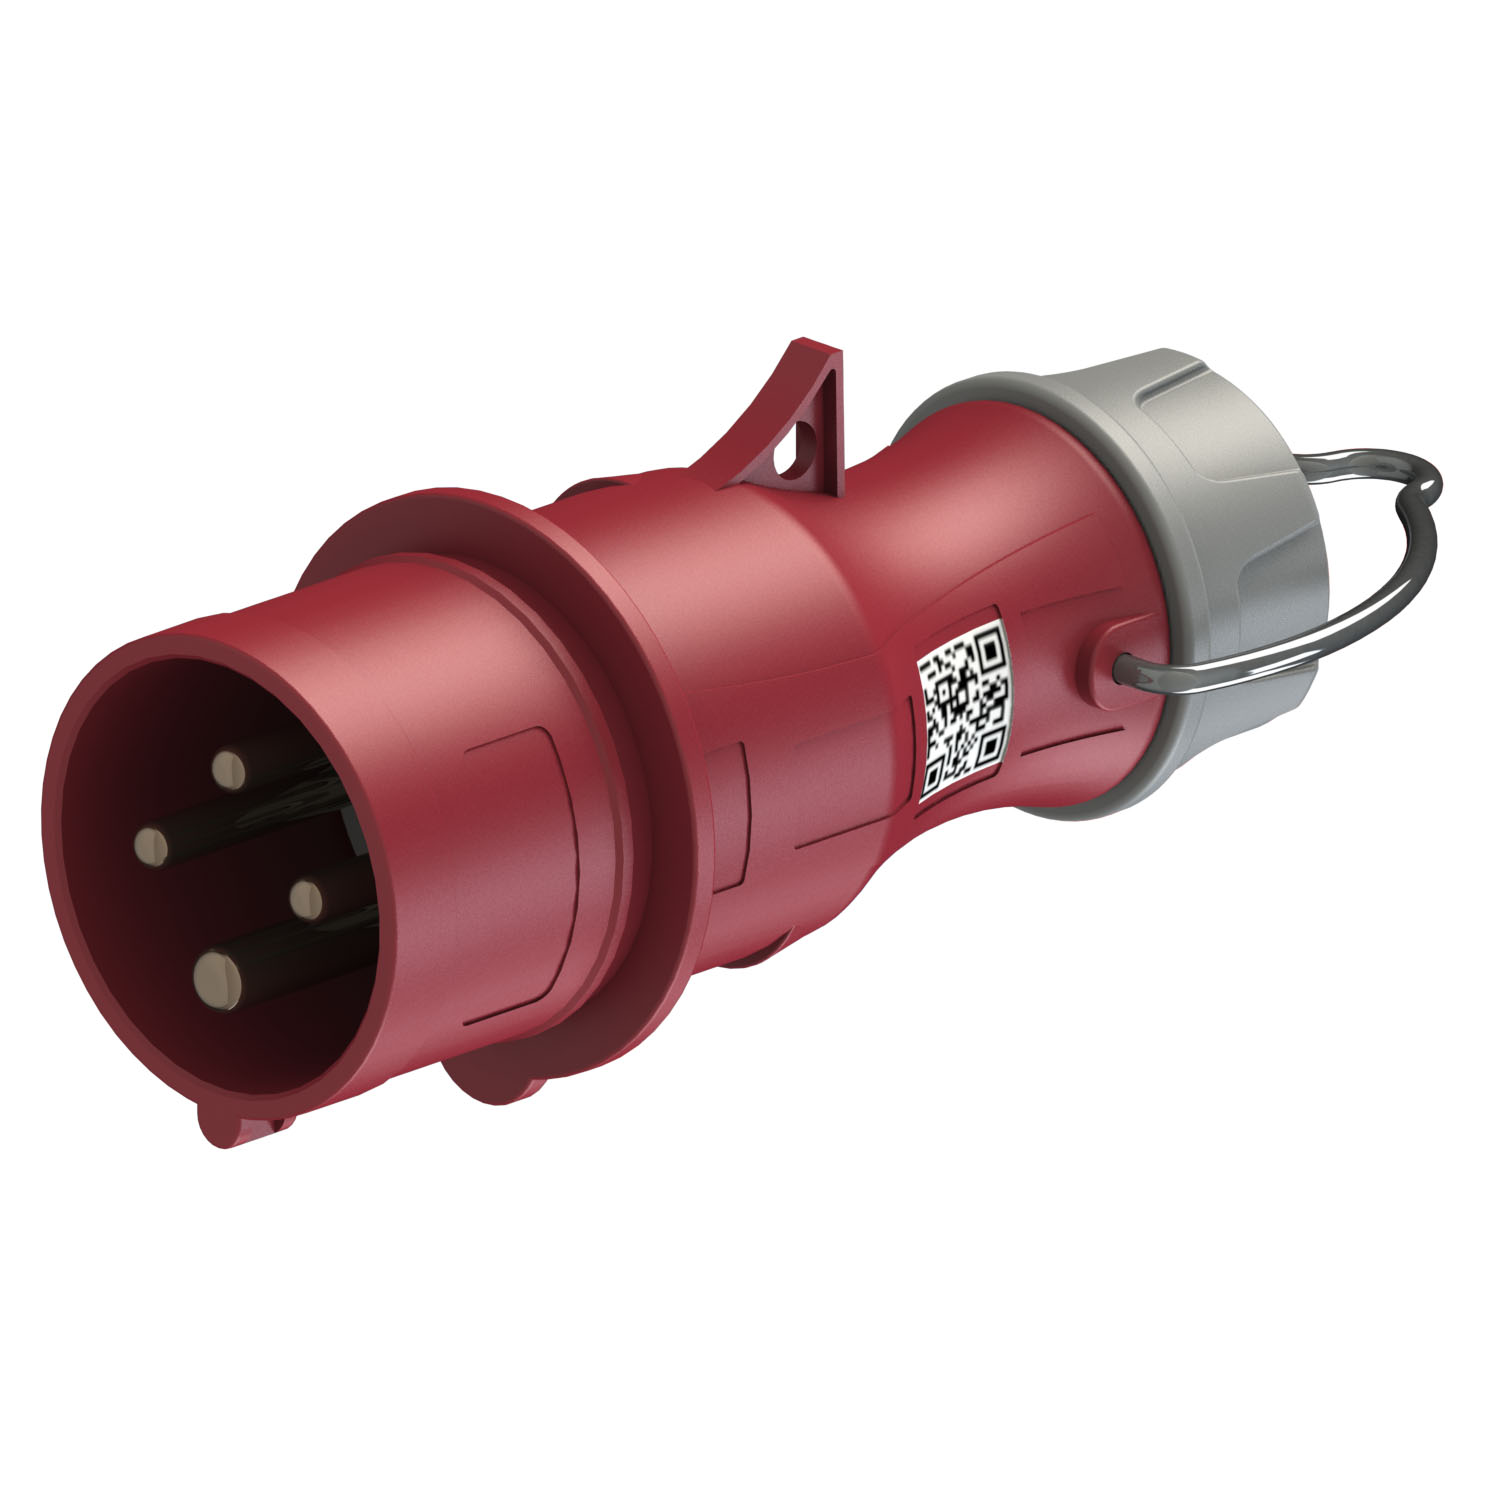 Nylon IEC IP44 16A 4P 400V industrial Plug electric power plug for LED light